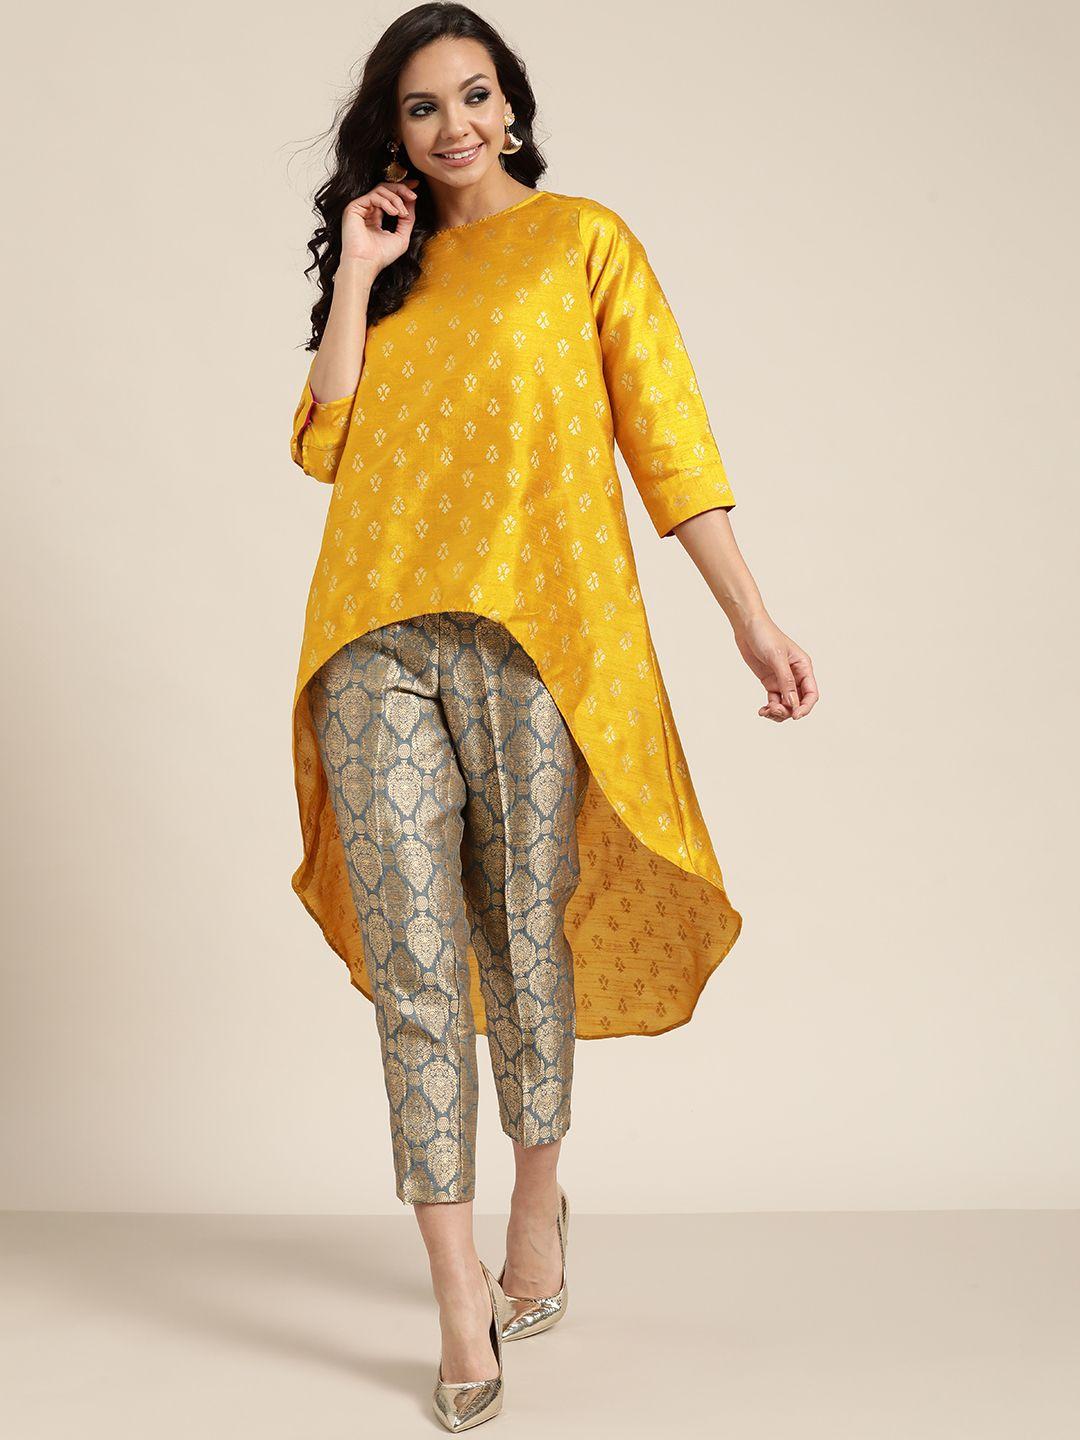 shae-by-sassafras-mustard-yellow-&-golden-printed-asymmetric-tunic